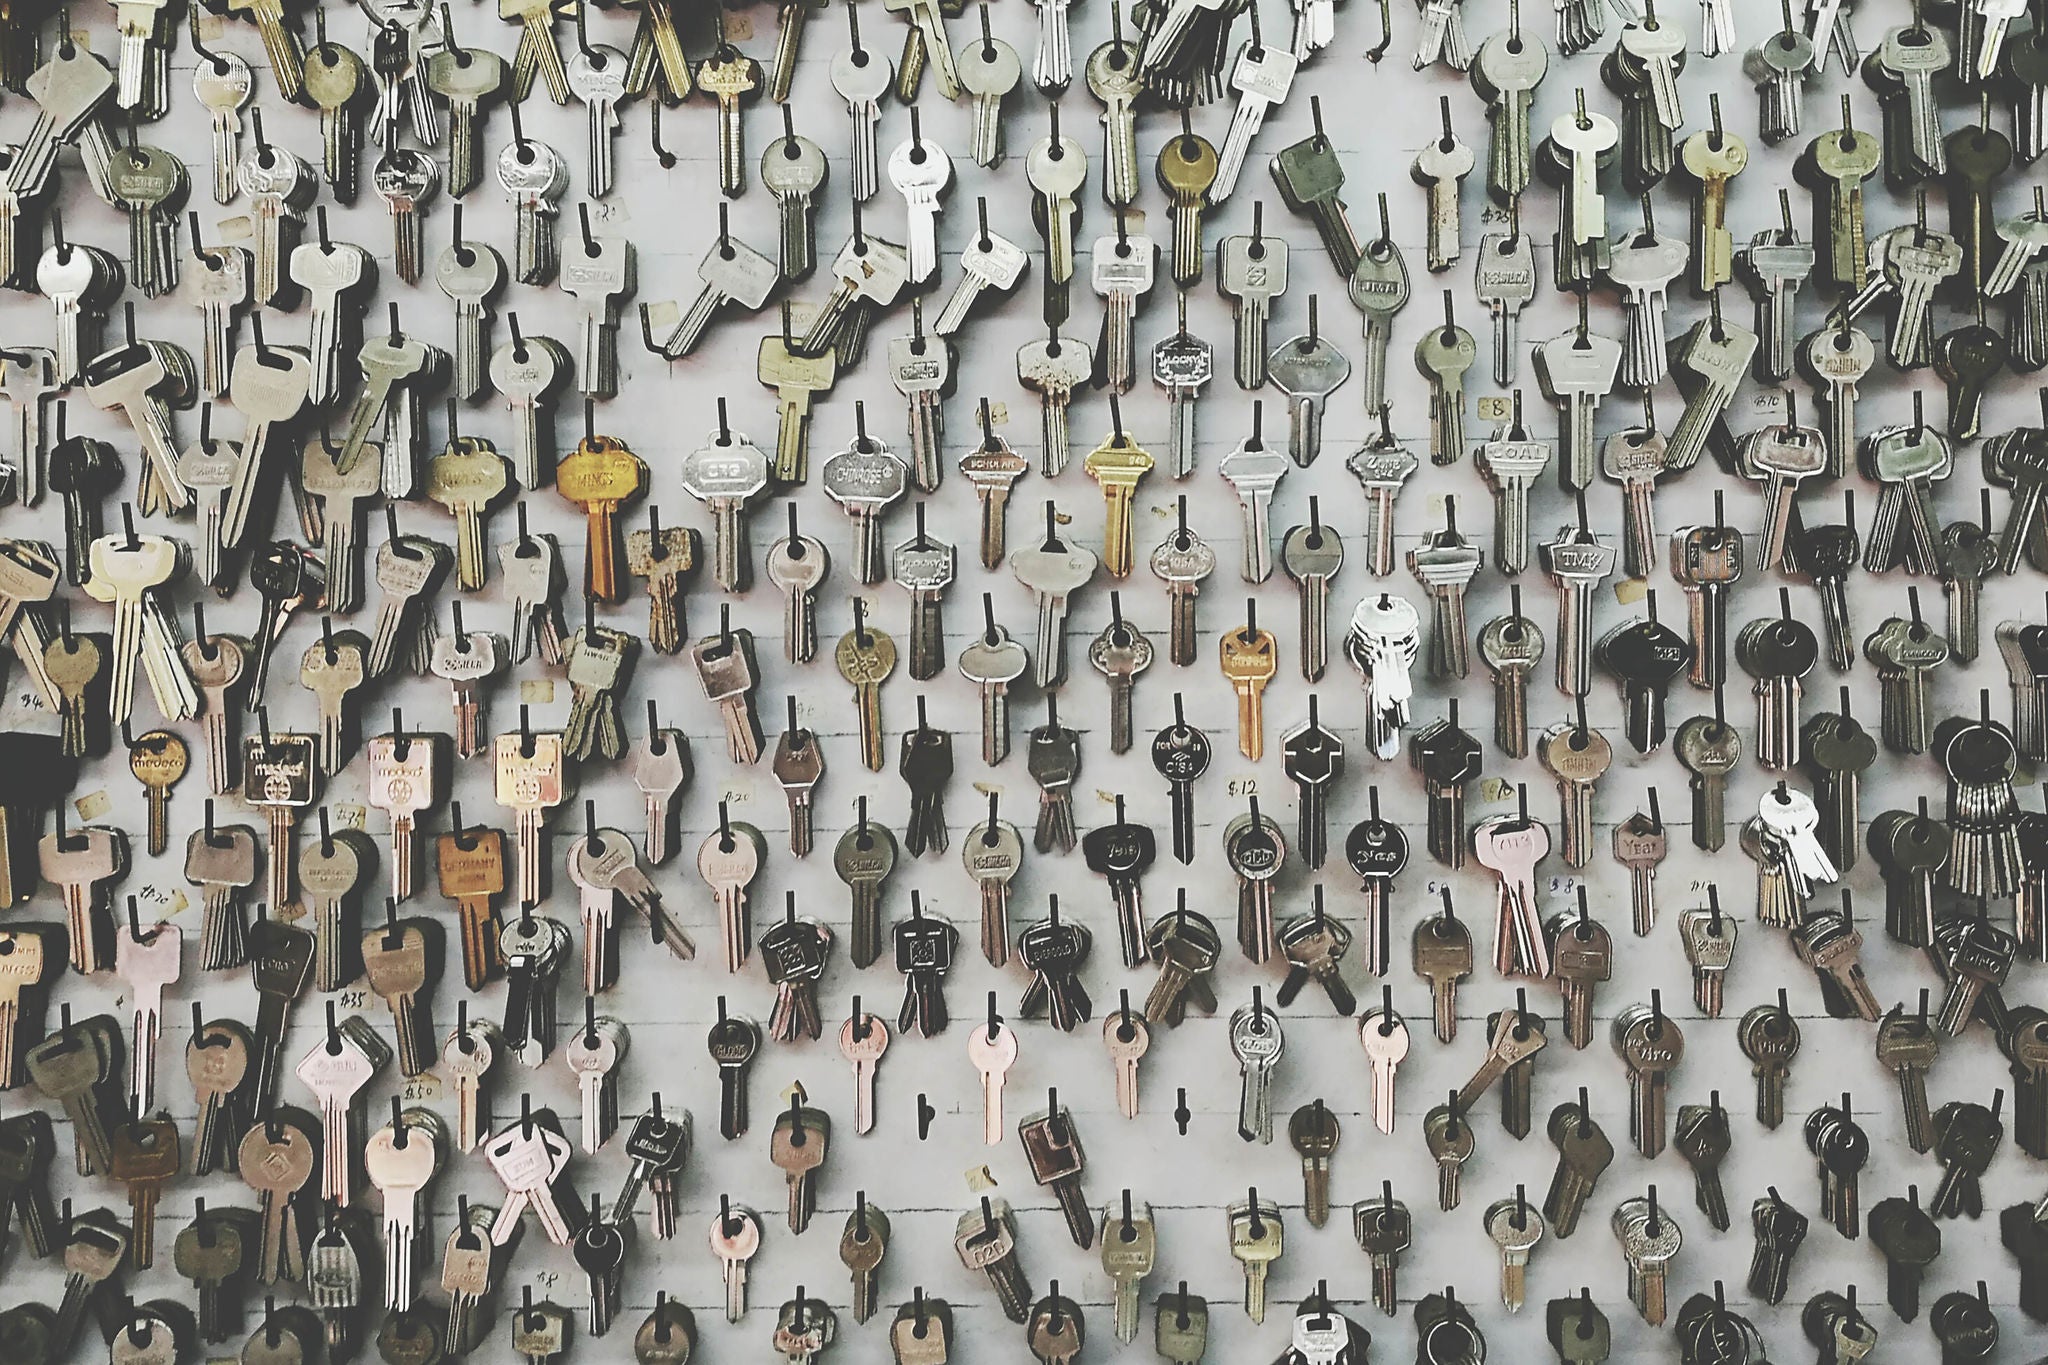 Full frame shot of hundreds of keys hanging on the wall in locksmith's shop